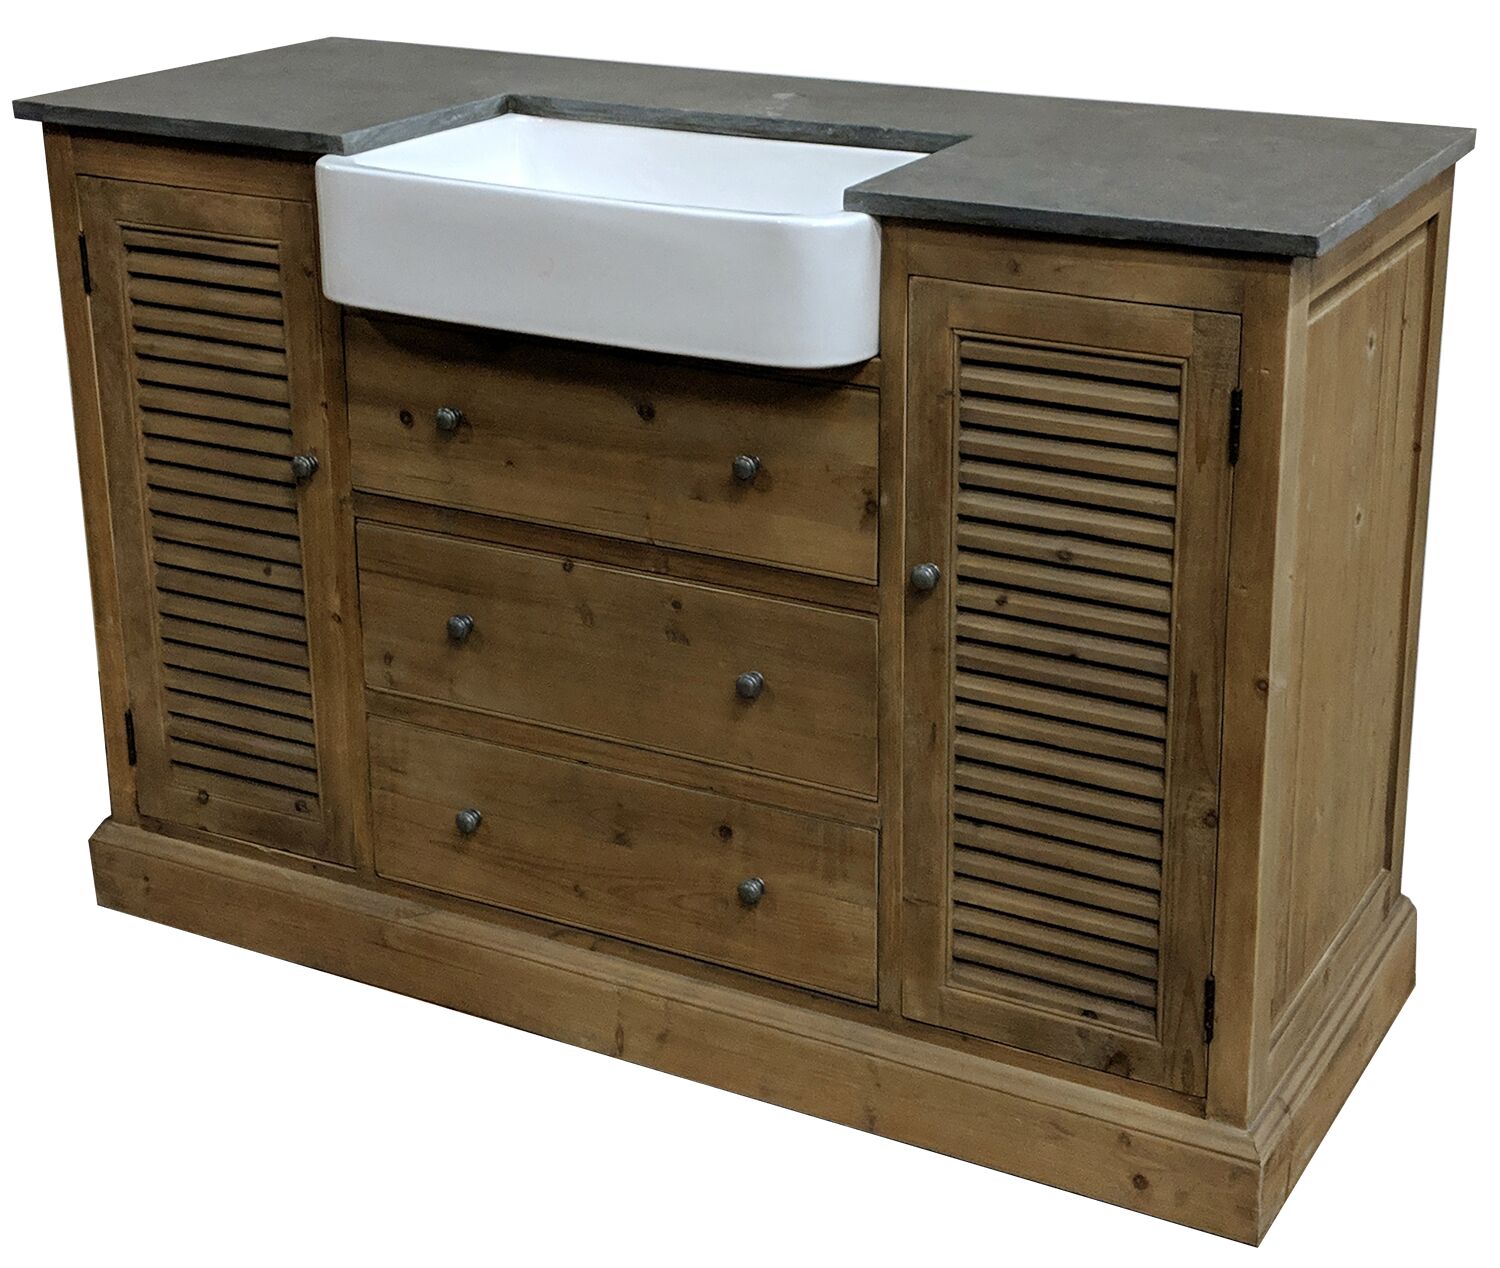 54" Handcrafted Reclaimed Pine Solid Wood Single Belgium Sink Bath Vanity